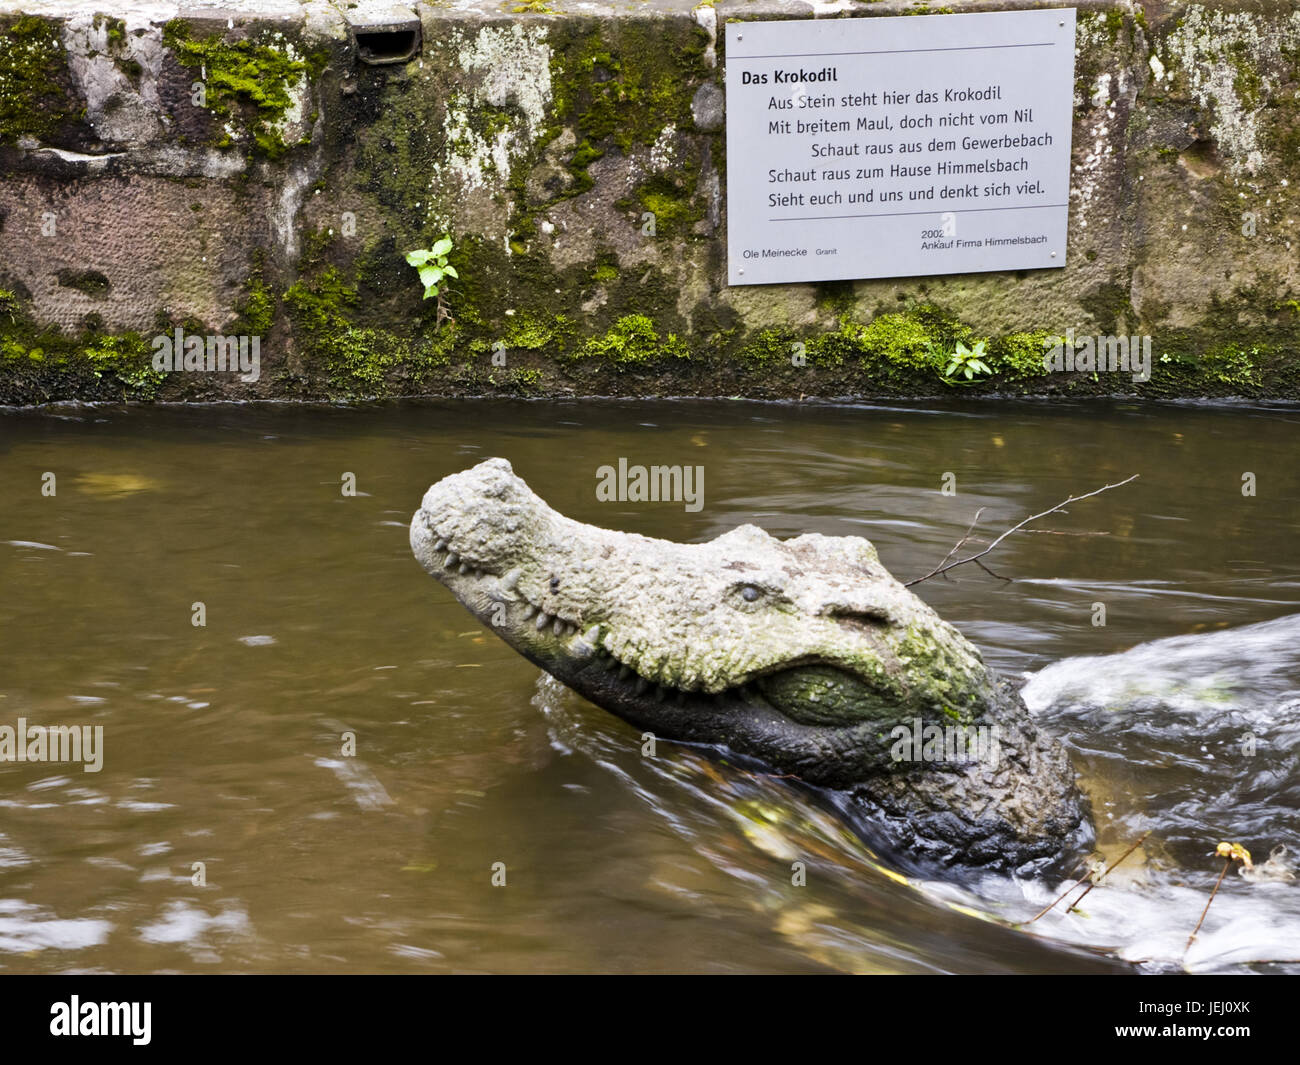 Crocodile, Freiburg im Breisgau, Germany Stock Photo